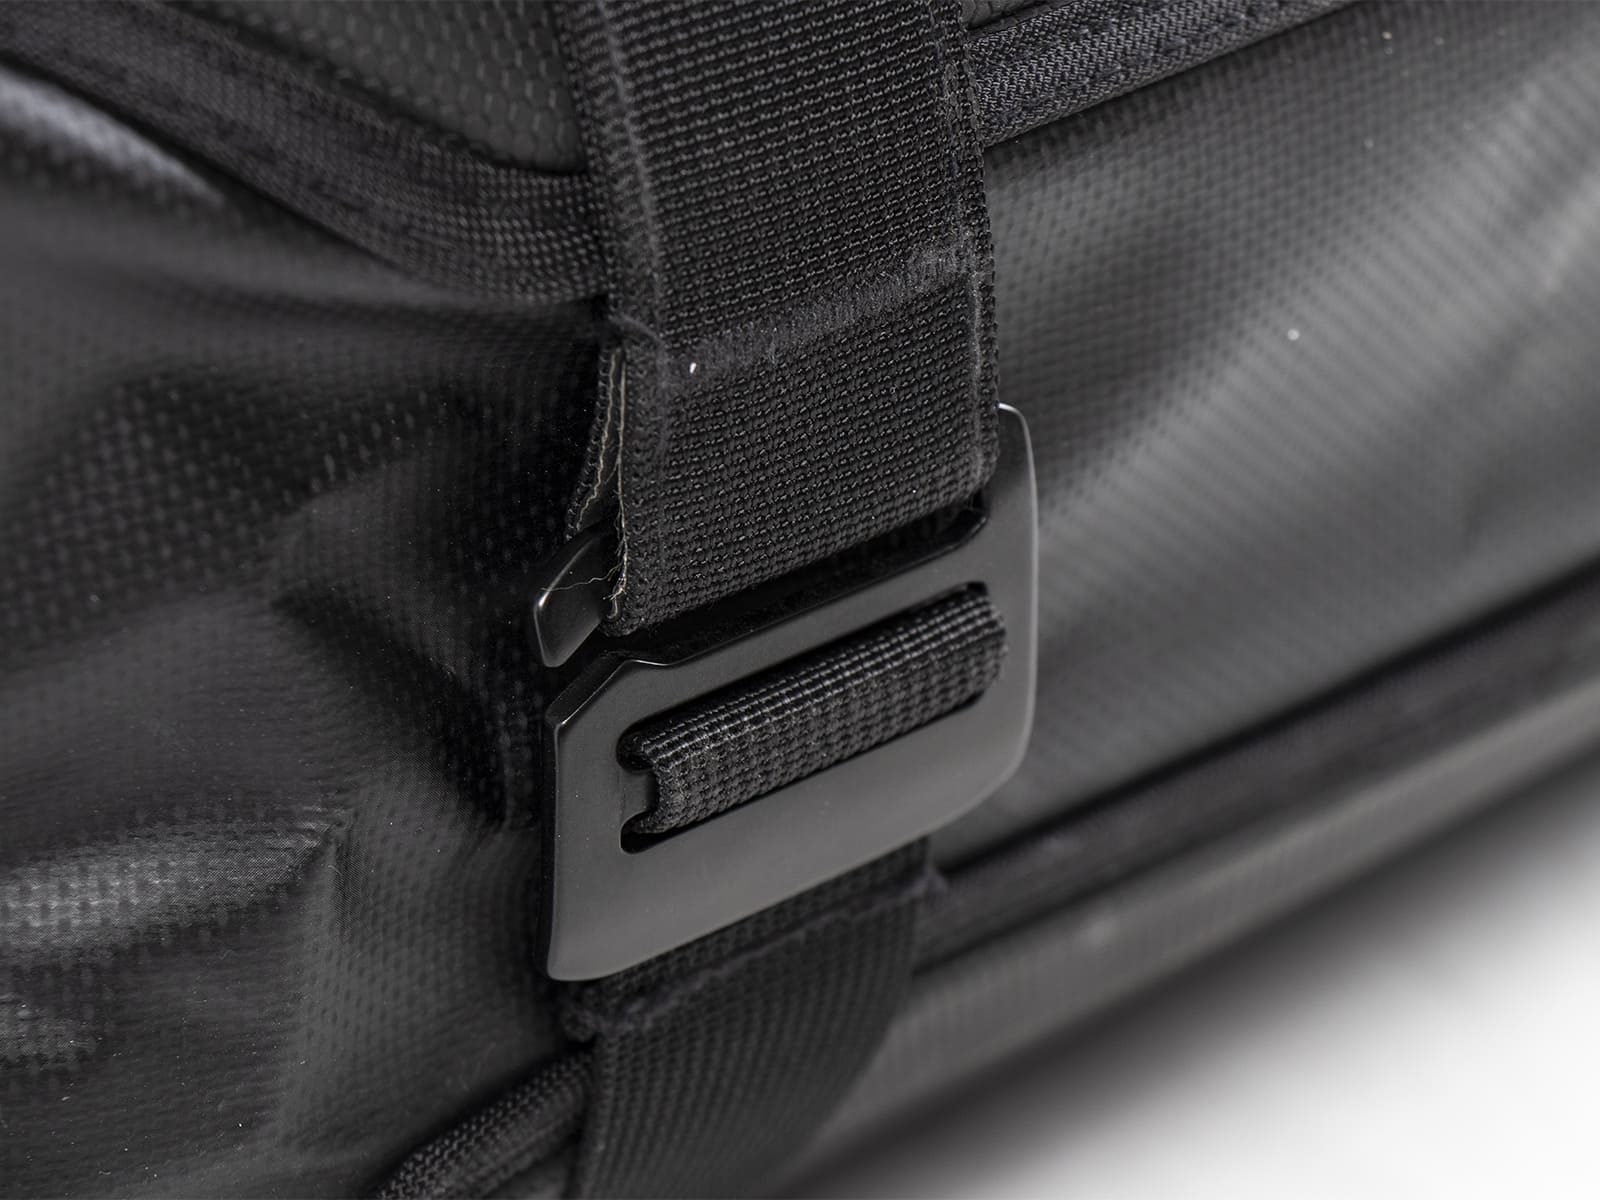 Sidebag Xtravel Basic (single bag) left side incl. 1x universal holding plate for side carrier